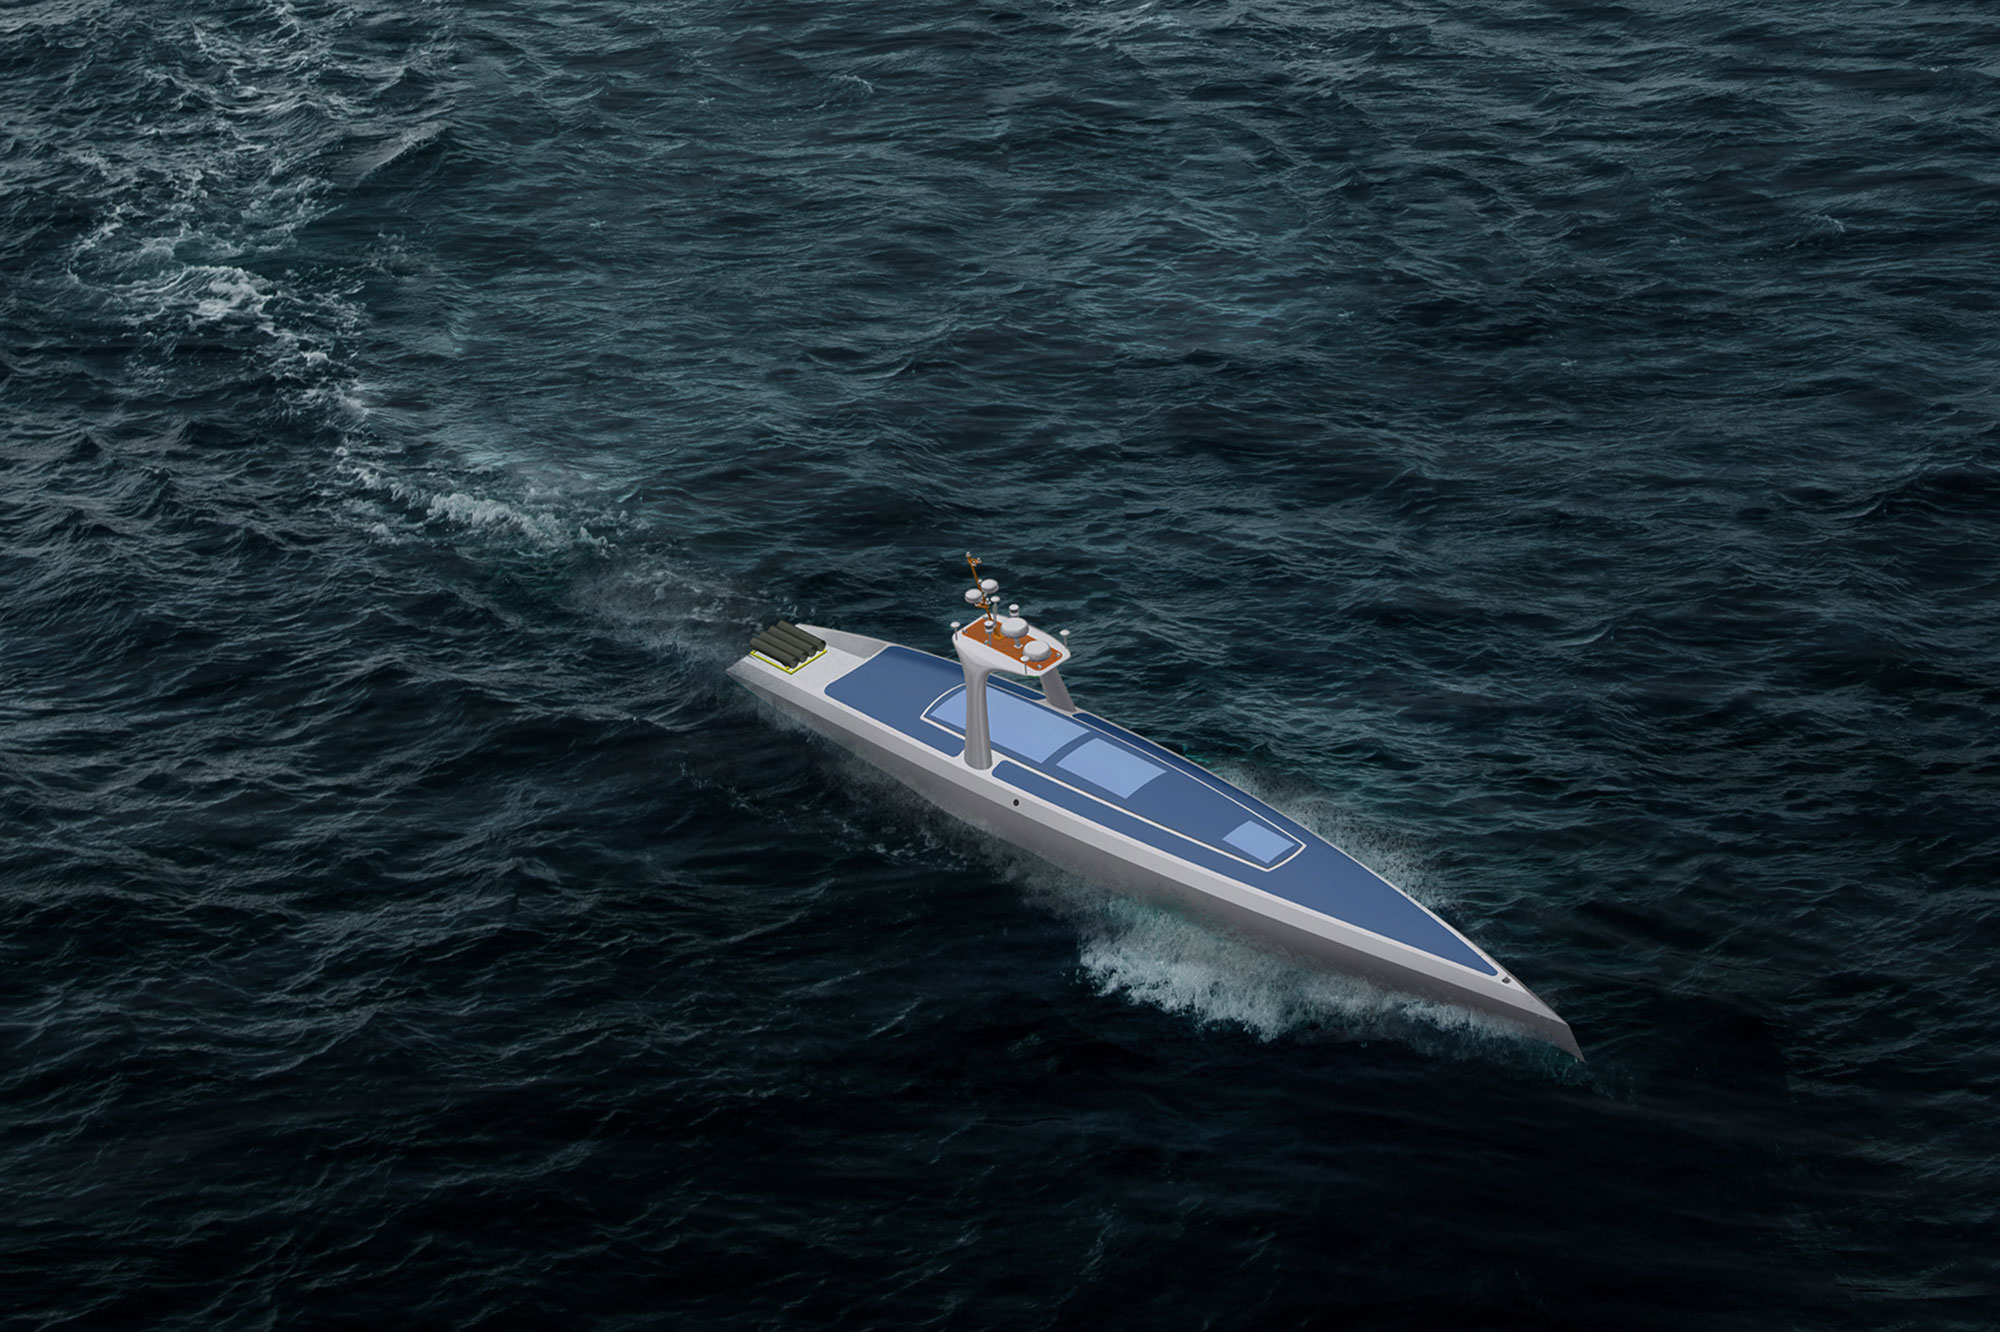 Oceanus research vessel CGI image superimposed on the ocean